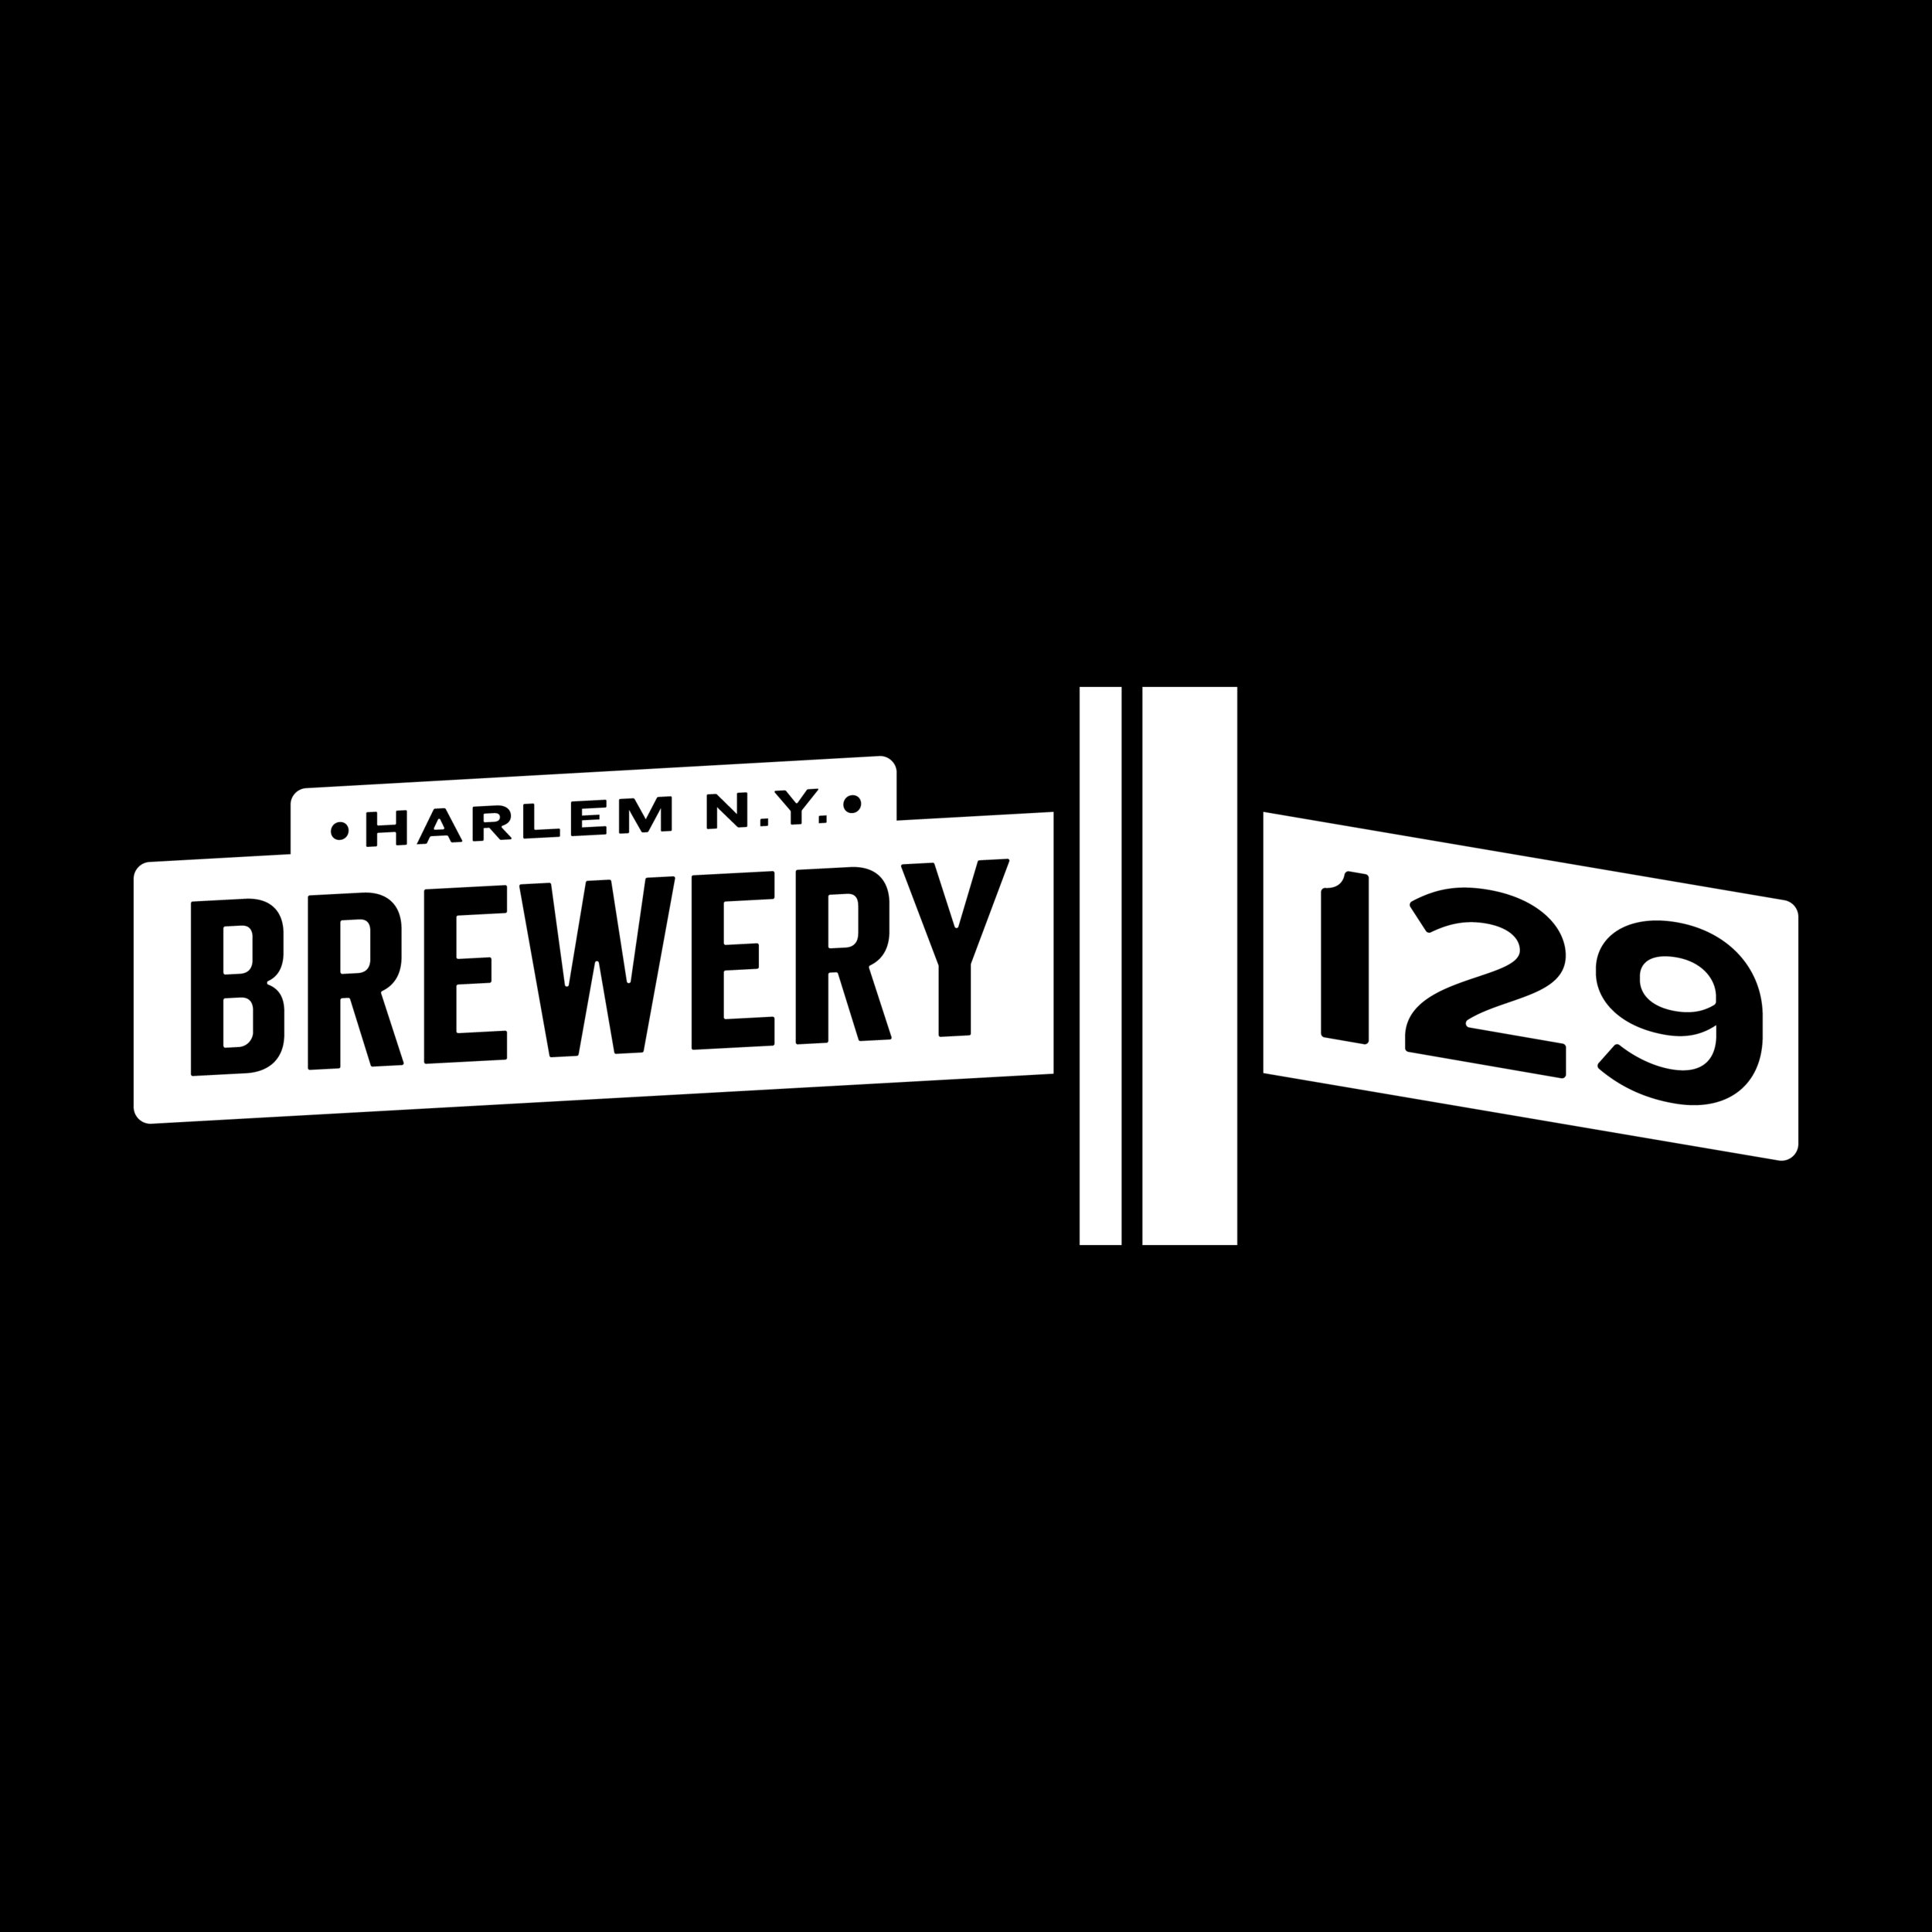 Brewery129 Logos-01.jpg